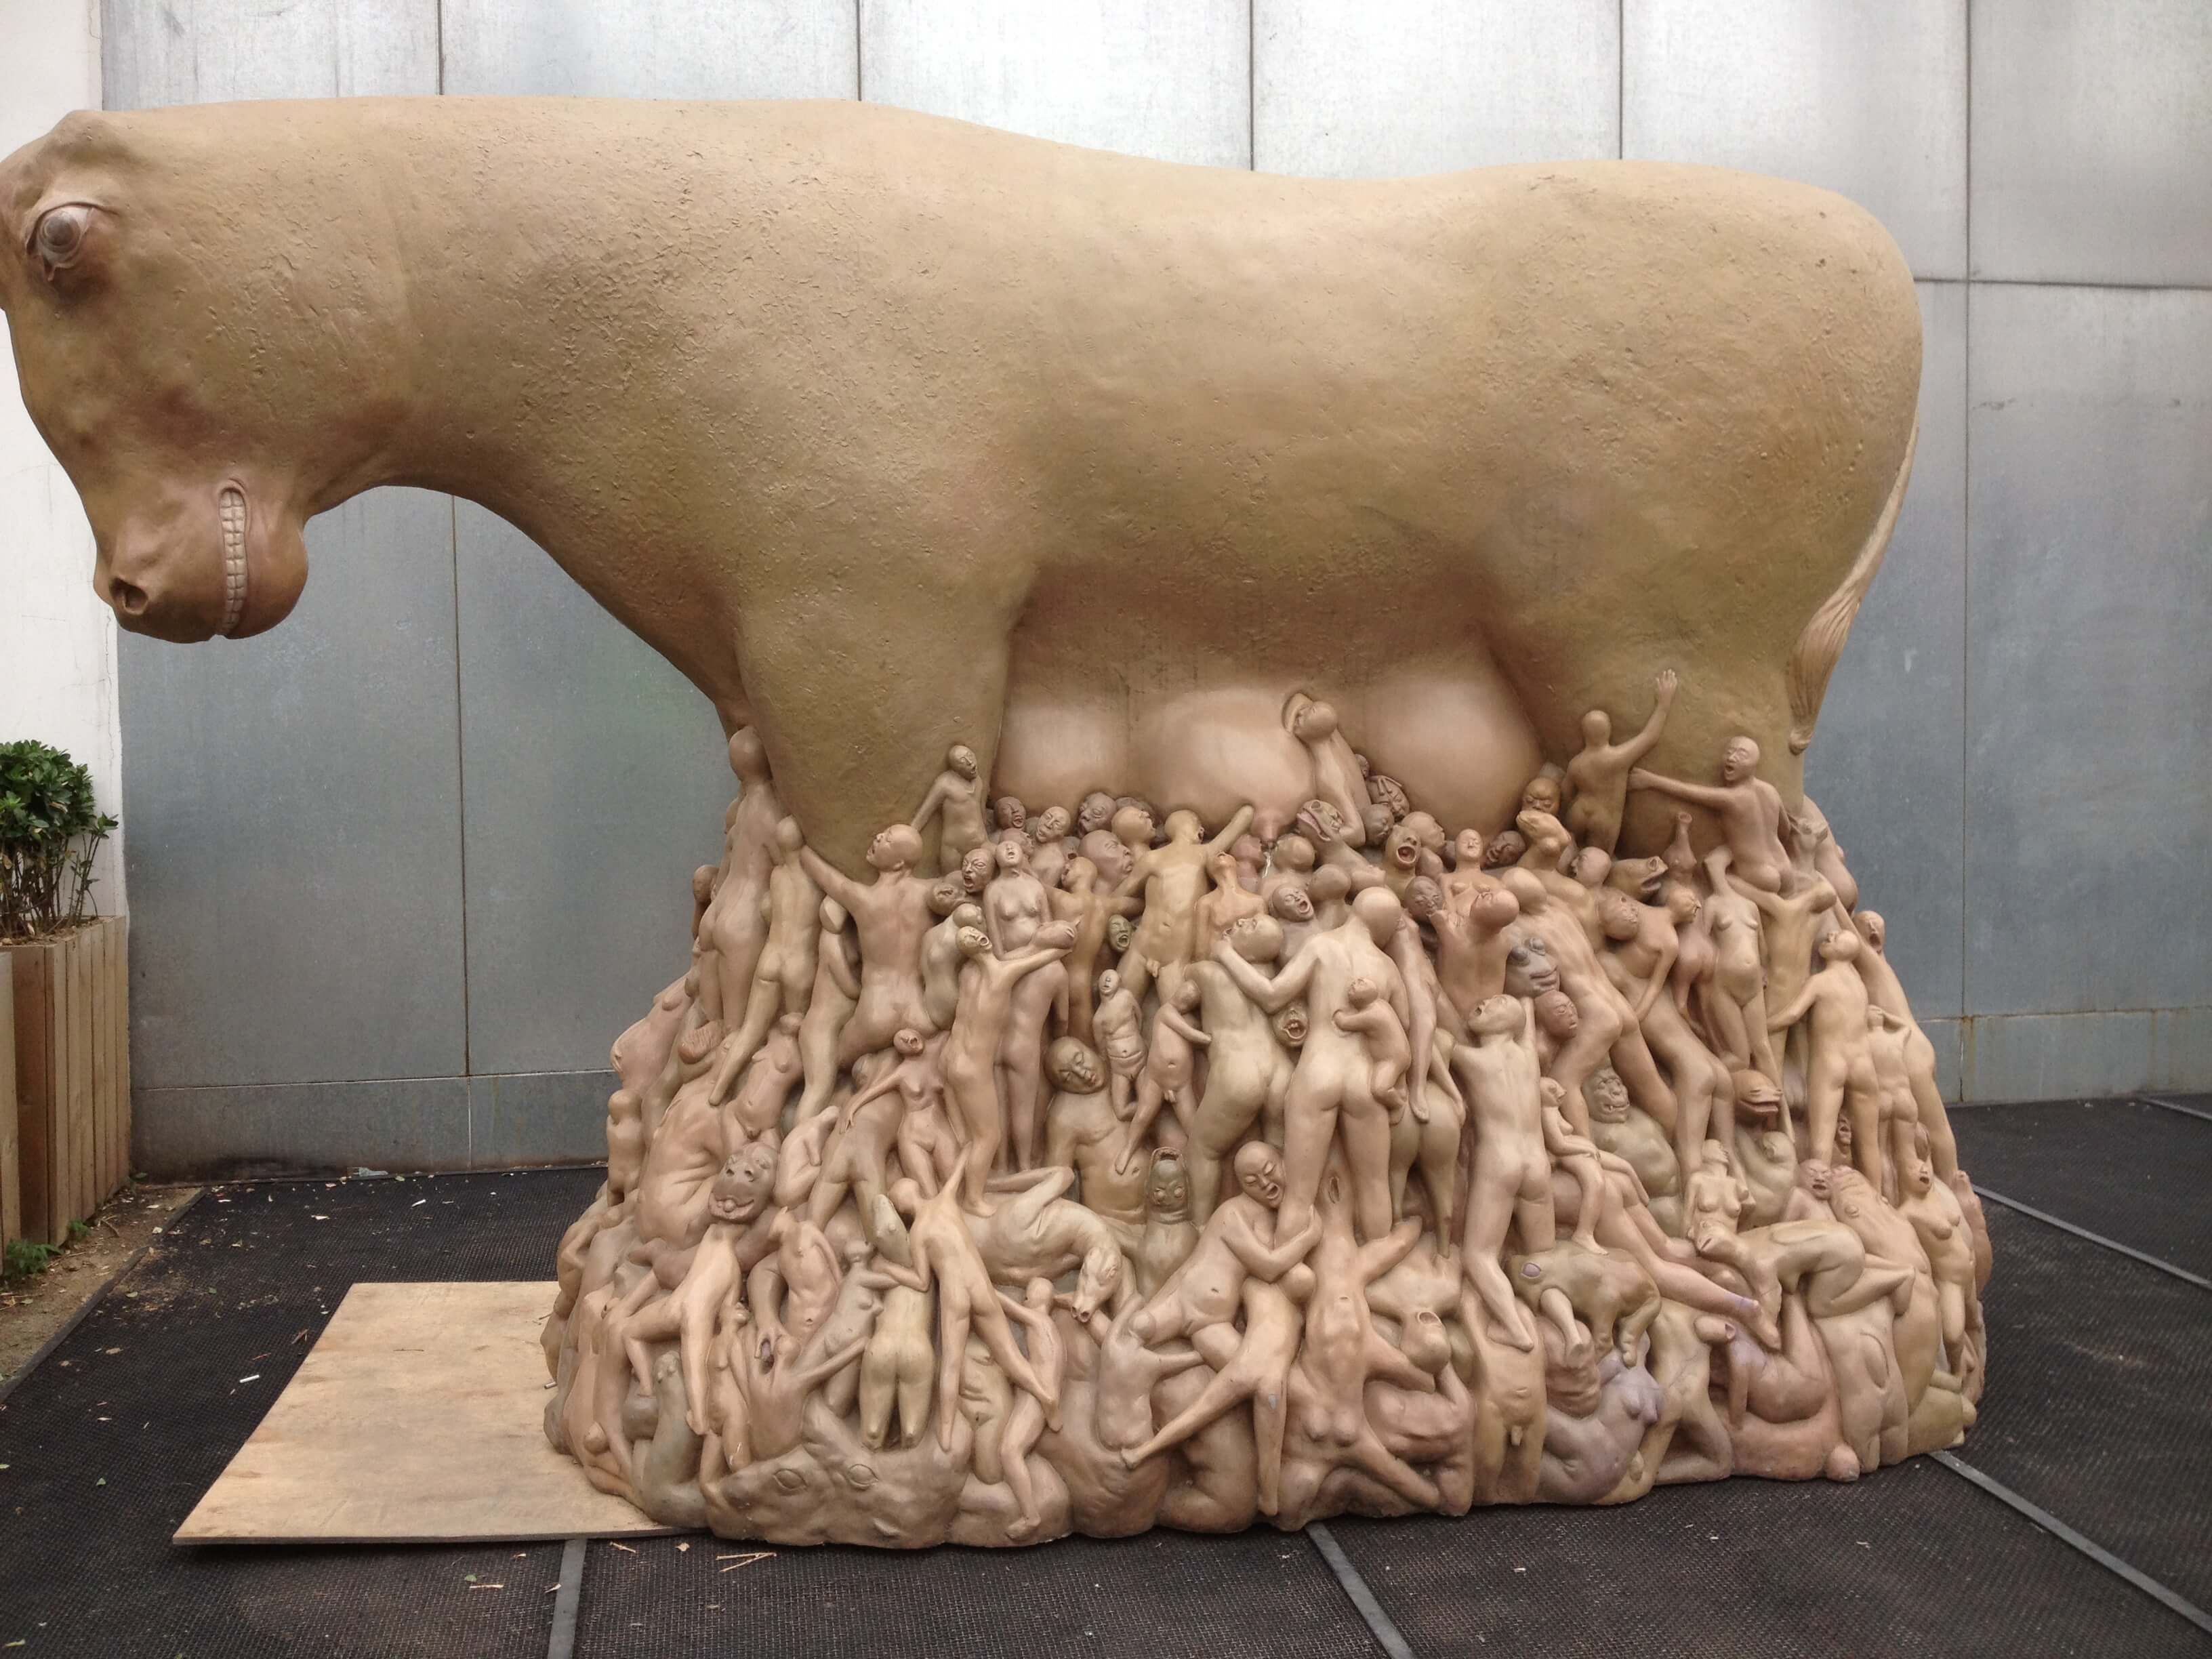 Beijing art. Statue of cow with humans suckling